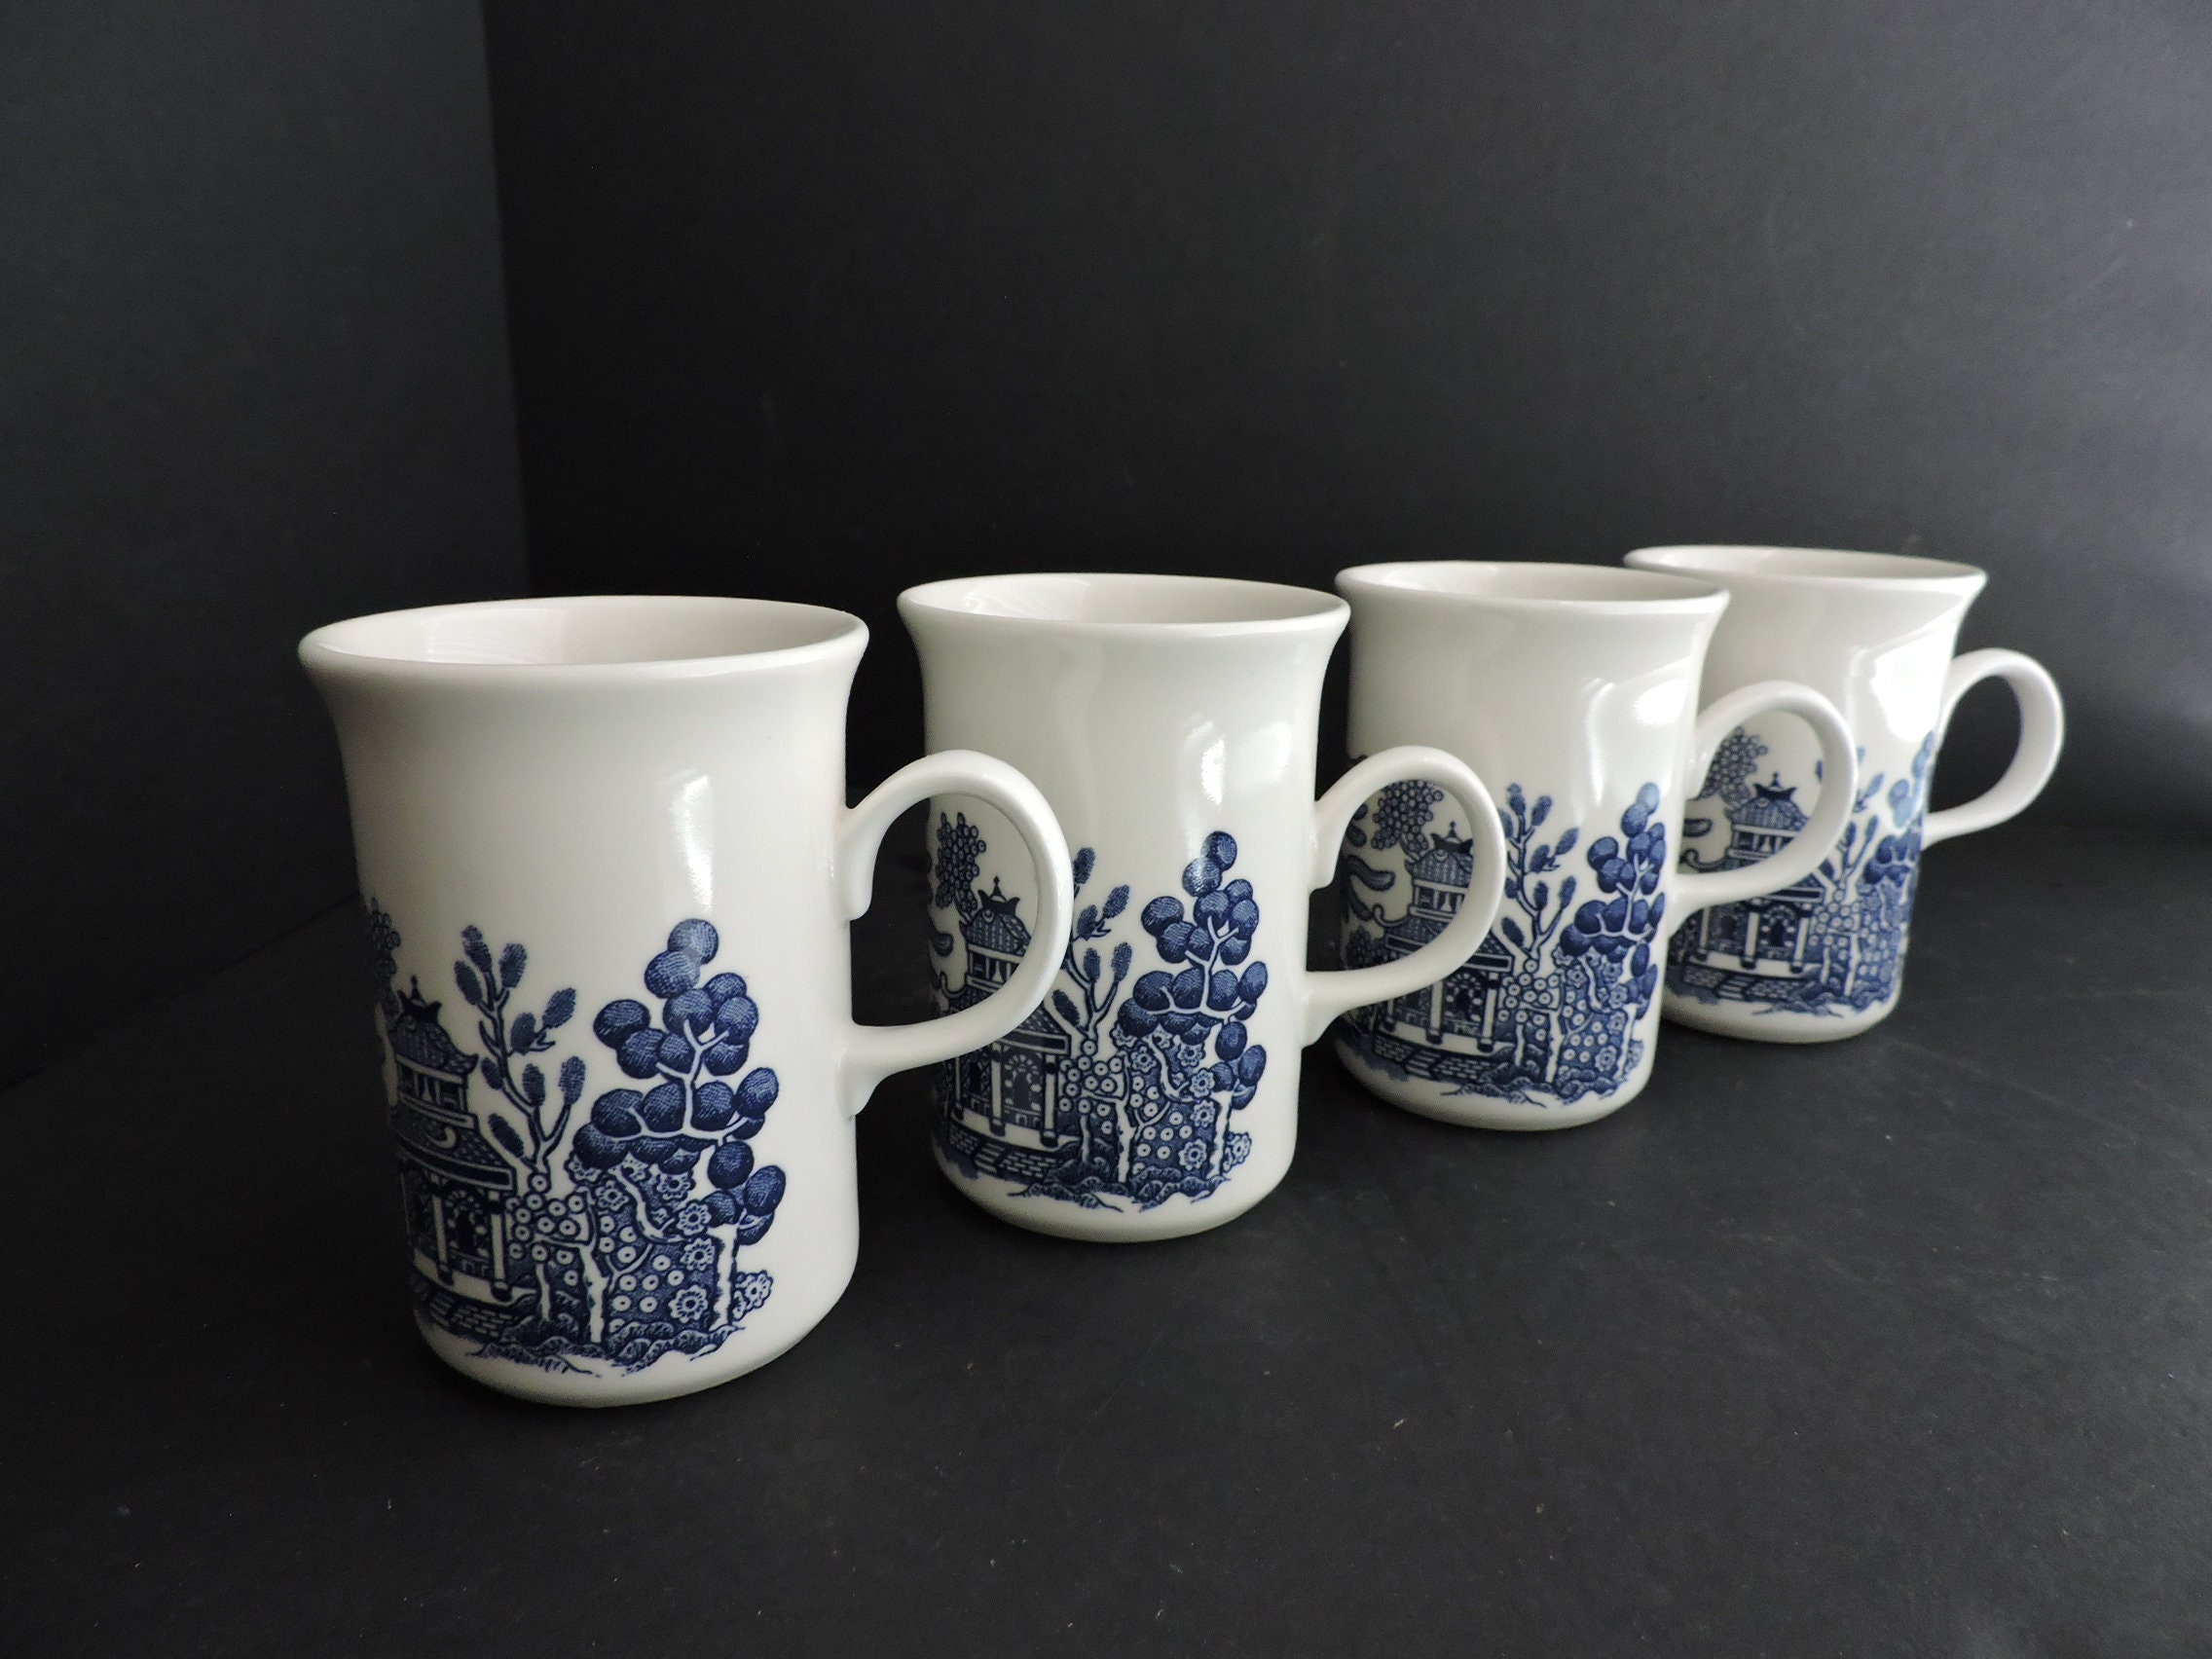 16 oz. Ceramic Mug (Willow Green/Black)